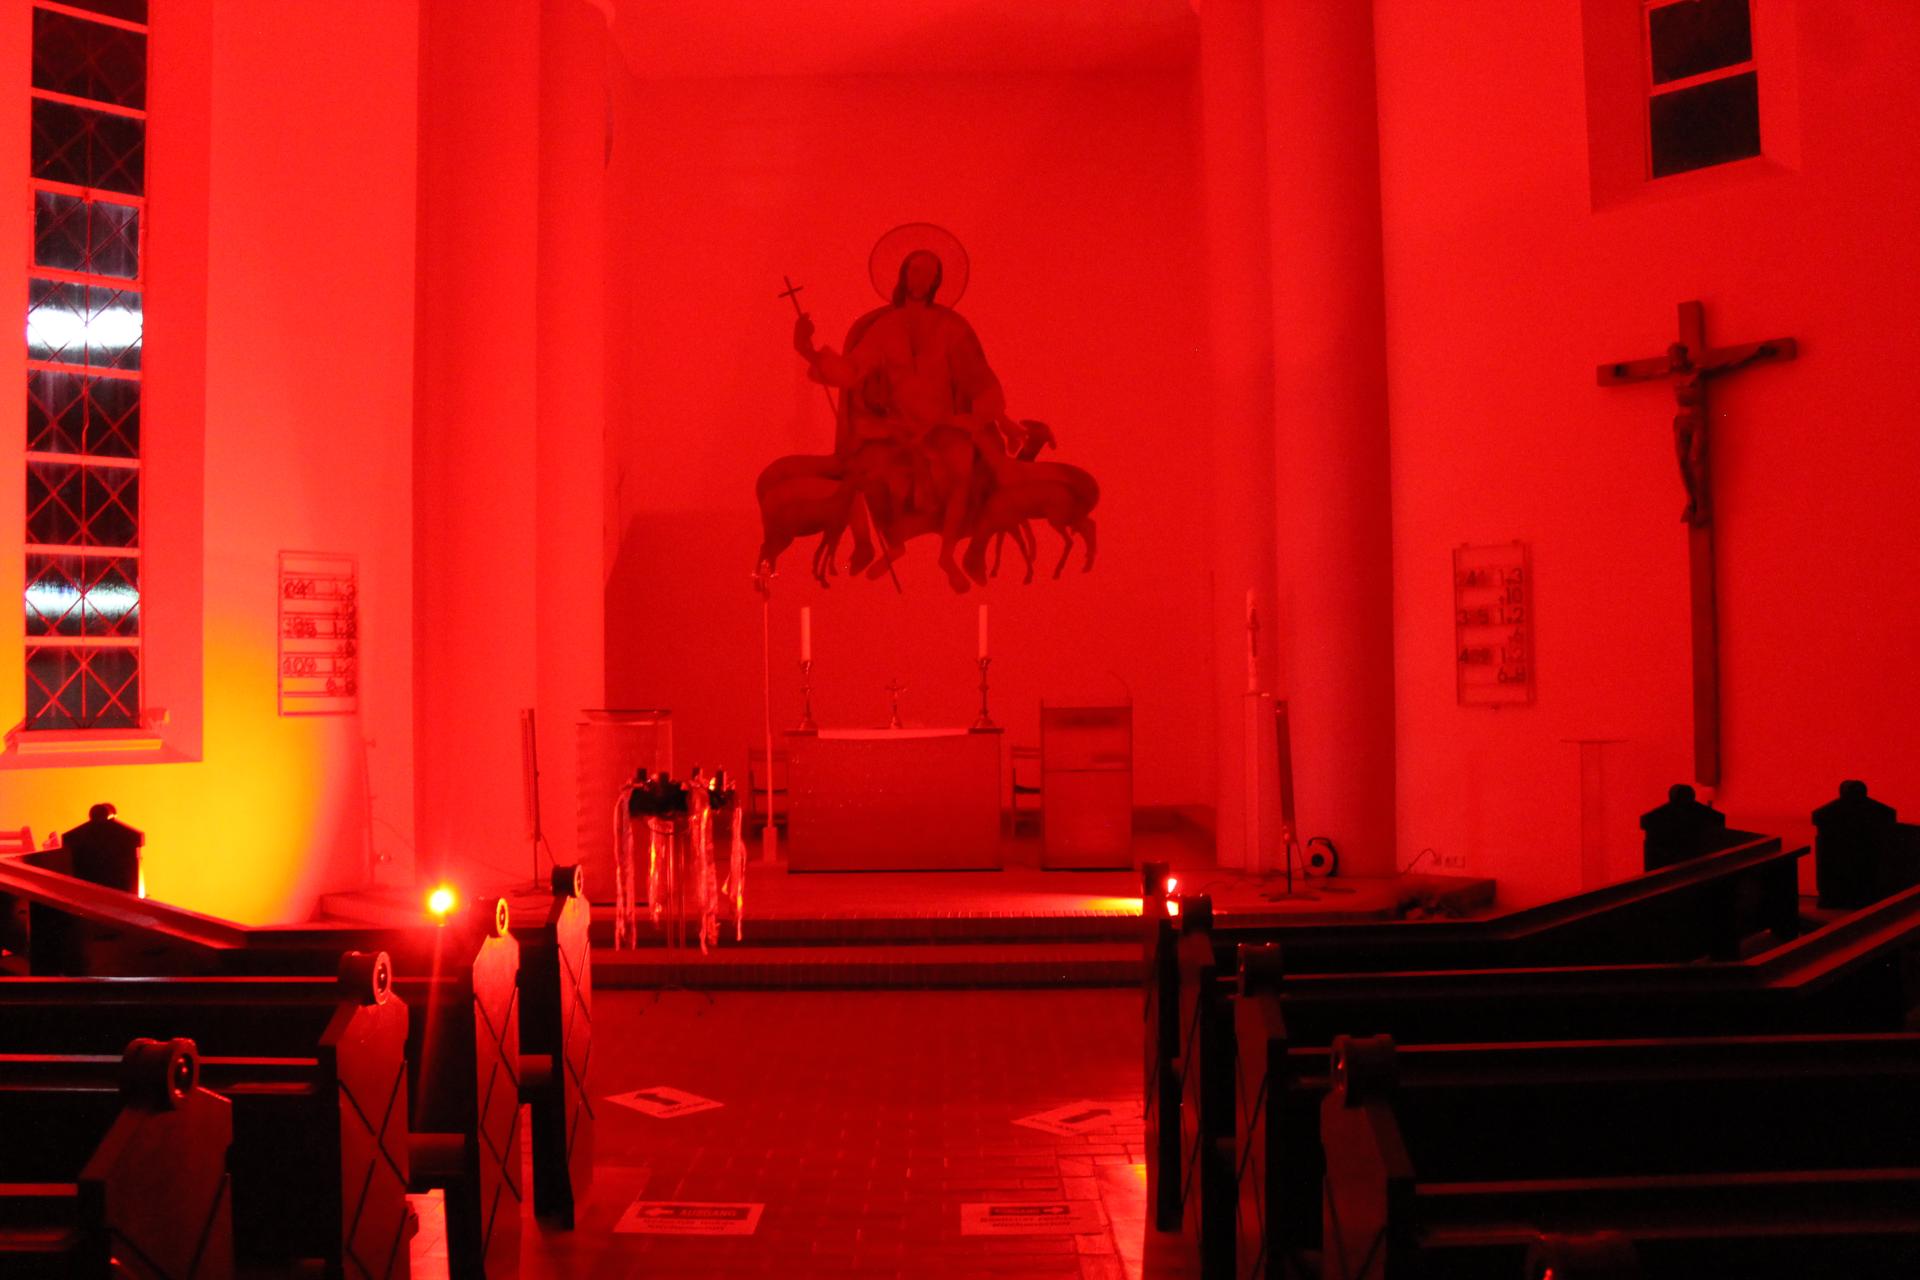 Kirche in Rot 2